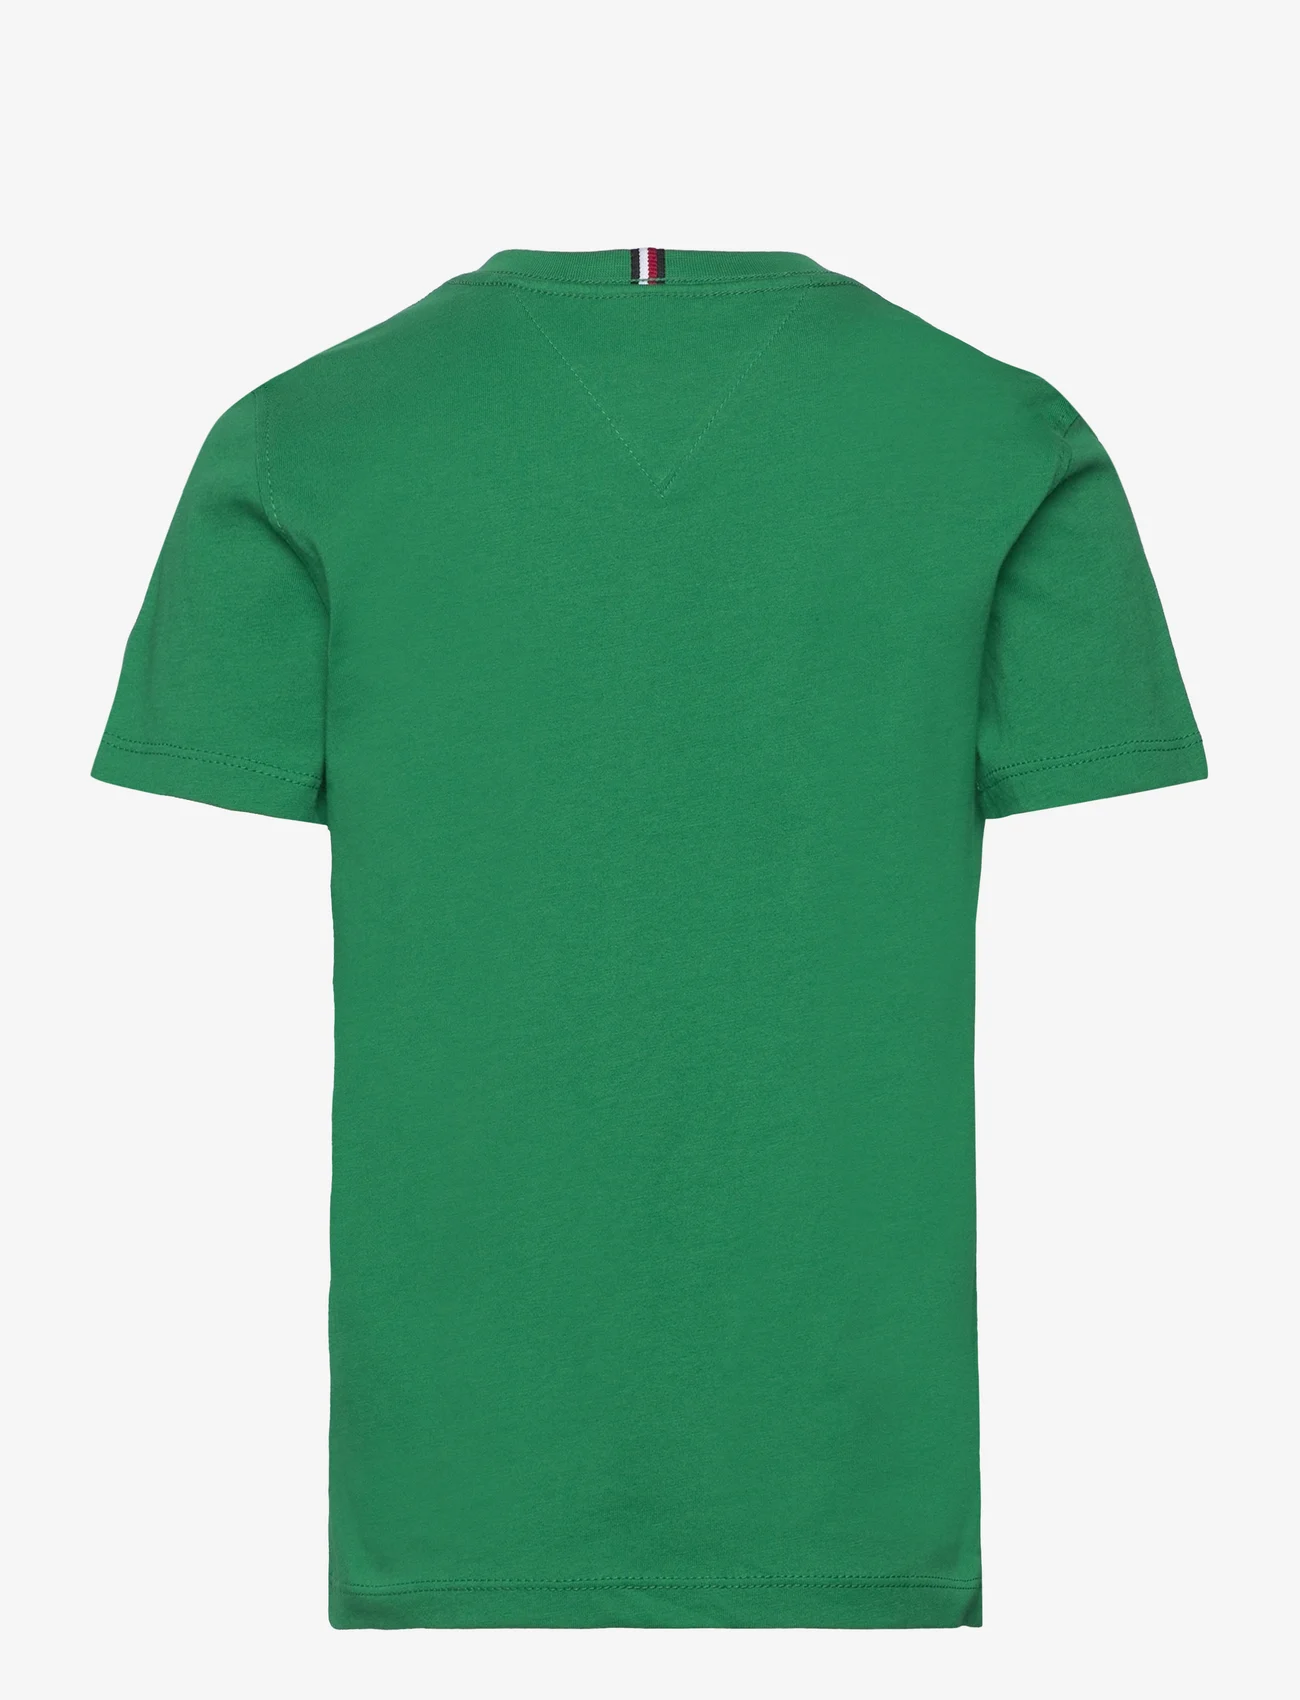 Tommy Hilfiger - ESSENTIAL COTTON TEE SS - kortärmade t-shirts - olympic green - 1